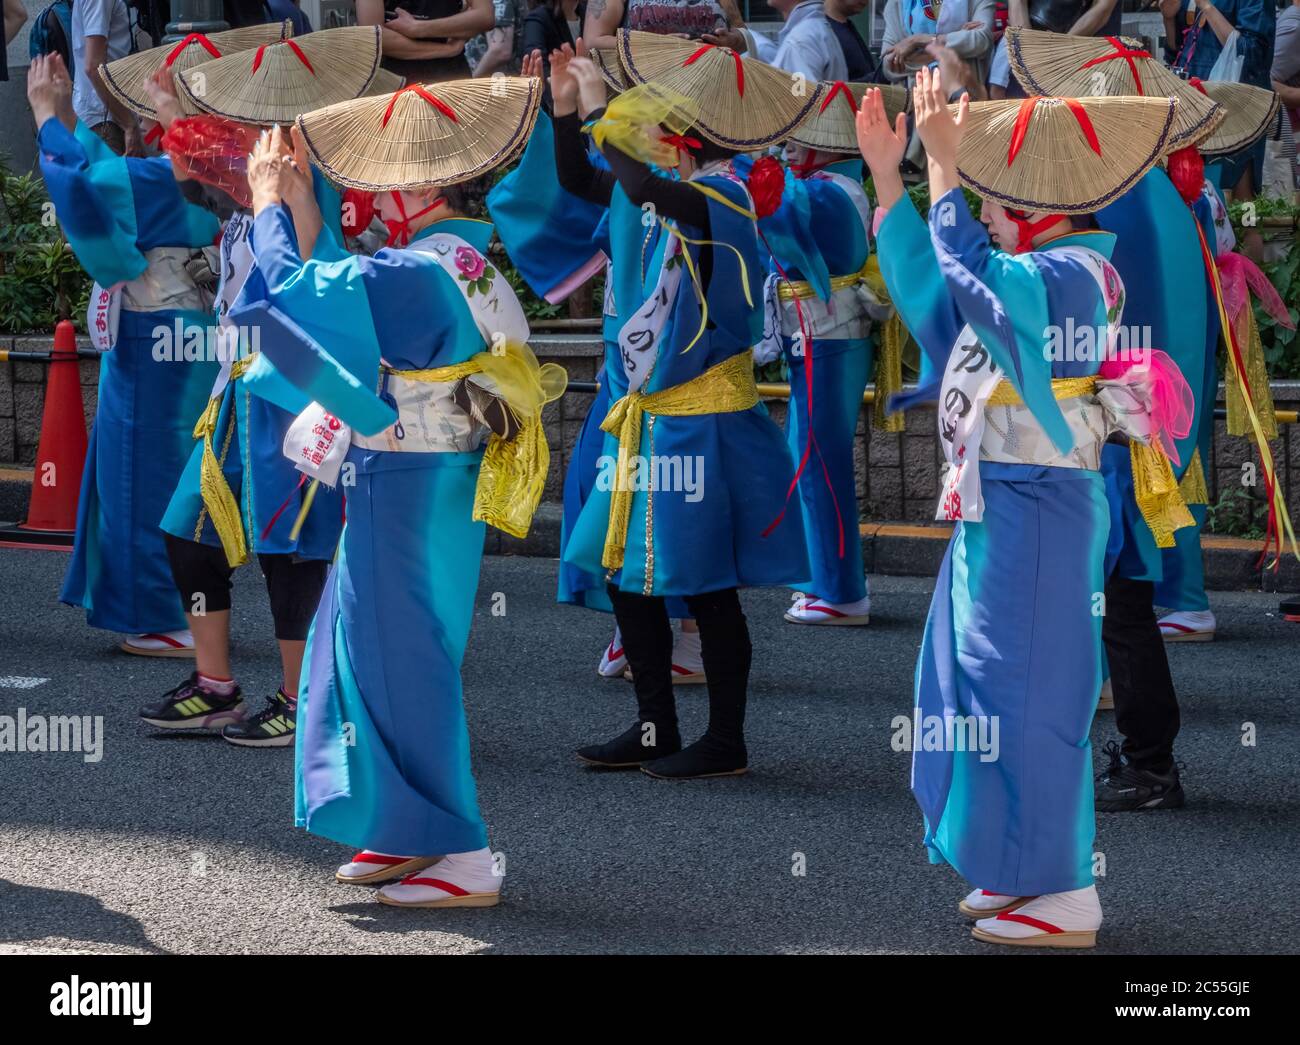 Volkstänzer in bunten Yukata und Amigasa Strohhut tanzen in Shibuya Kagoshima Ohara Matsuri Festival in der Straße von Shibuya, Tokyo, Japan. Stockfoto